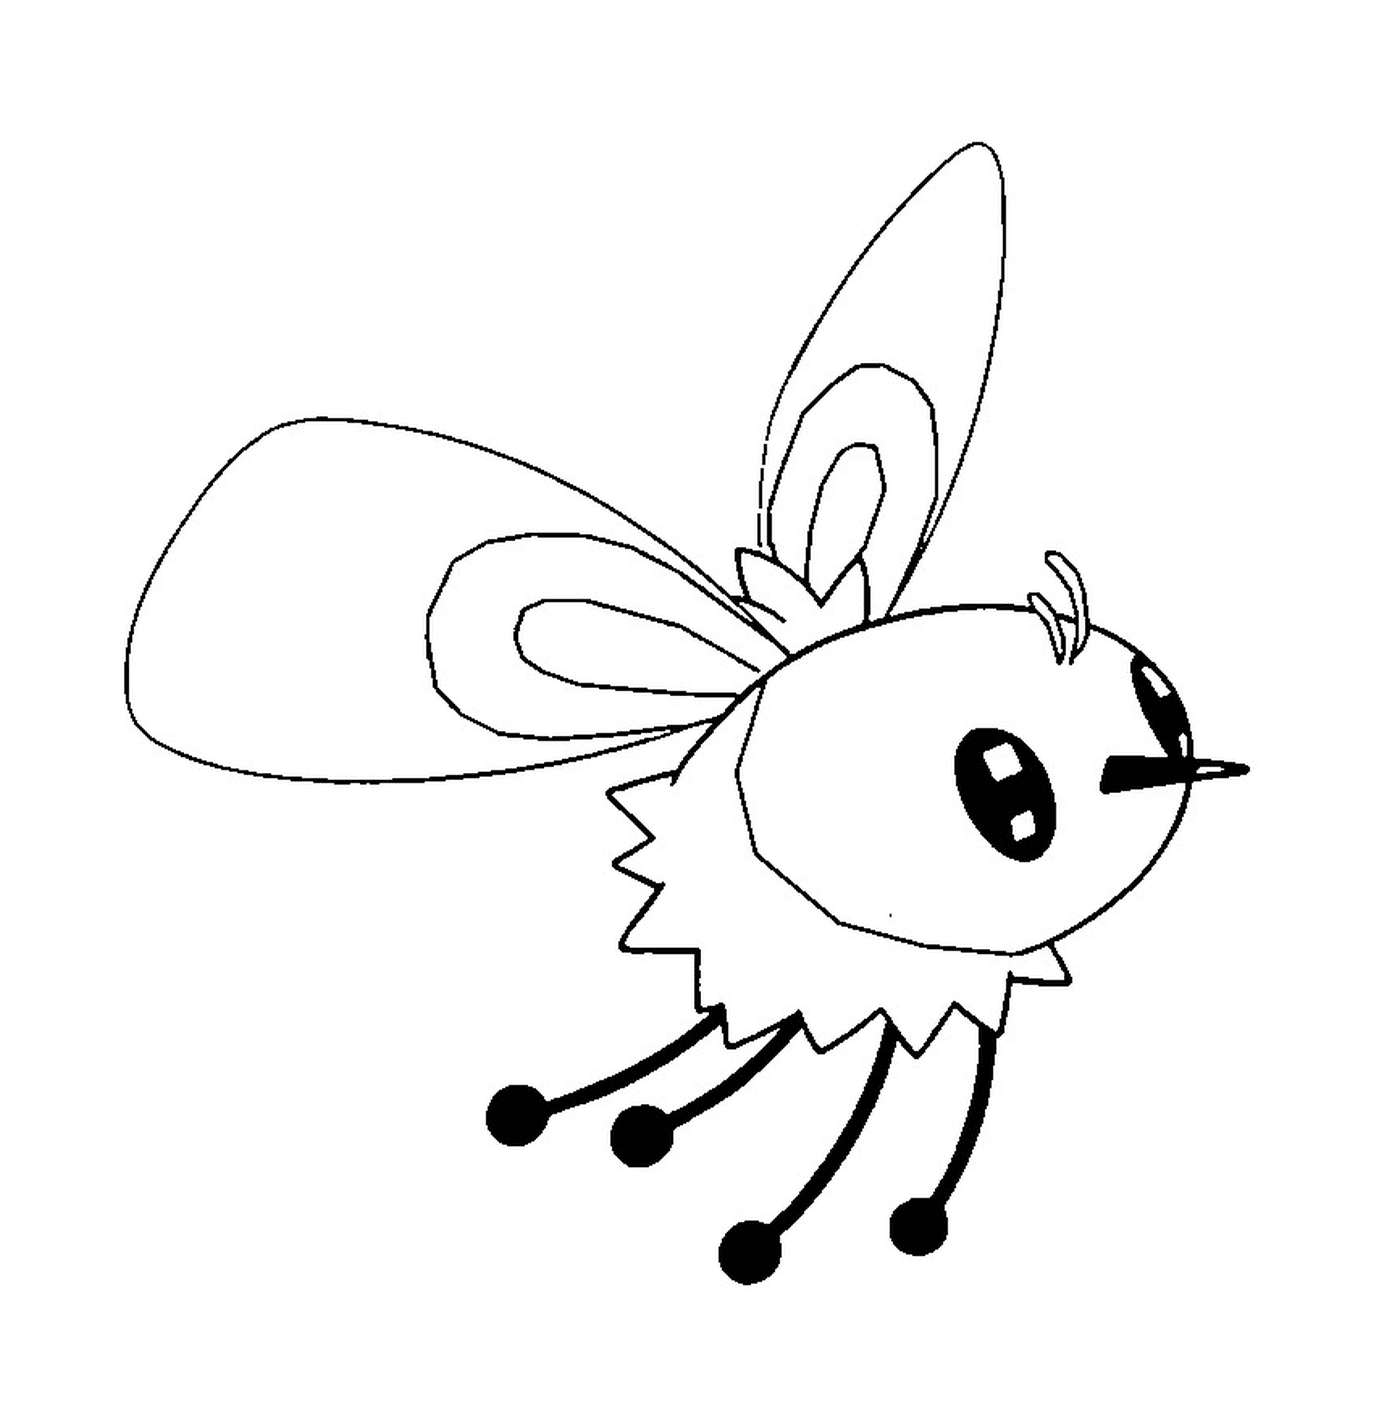  Bombydou, un insetto 